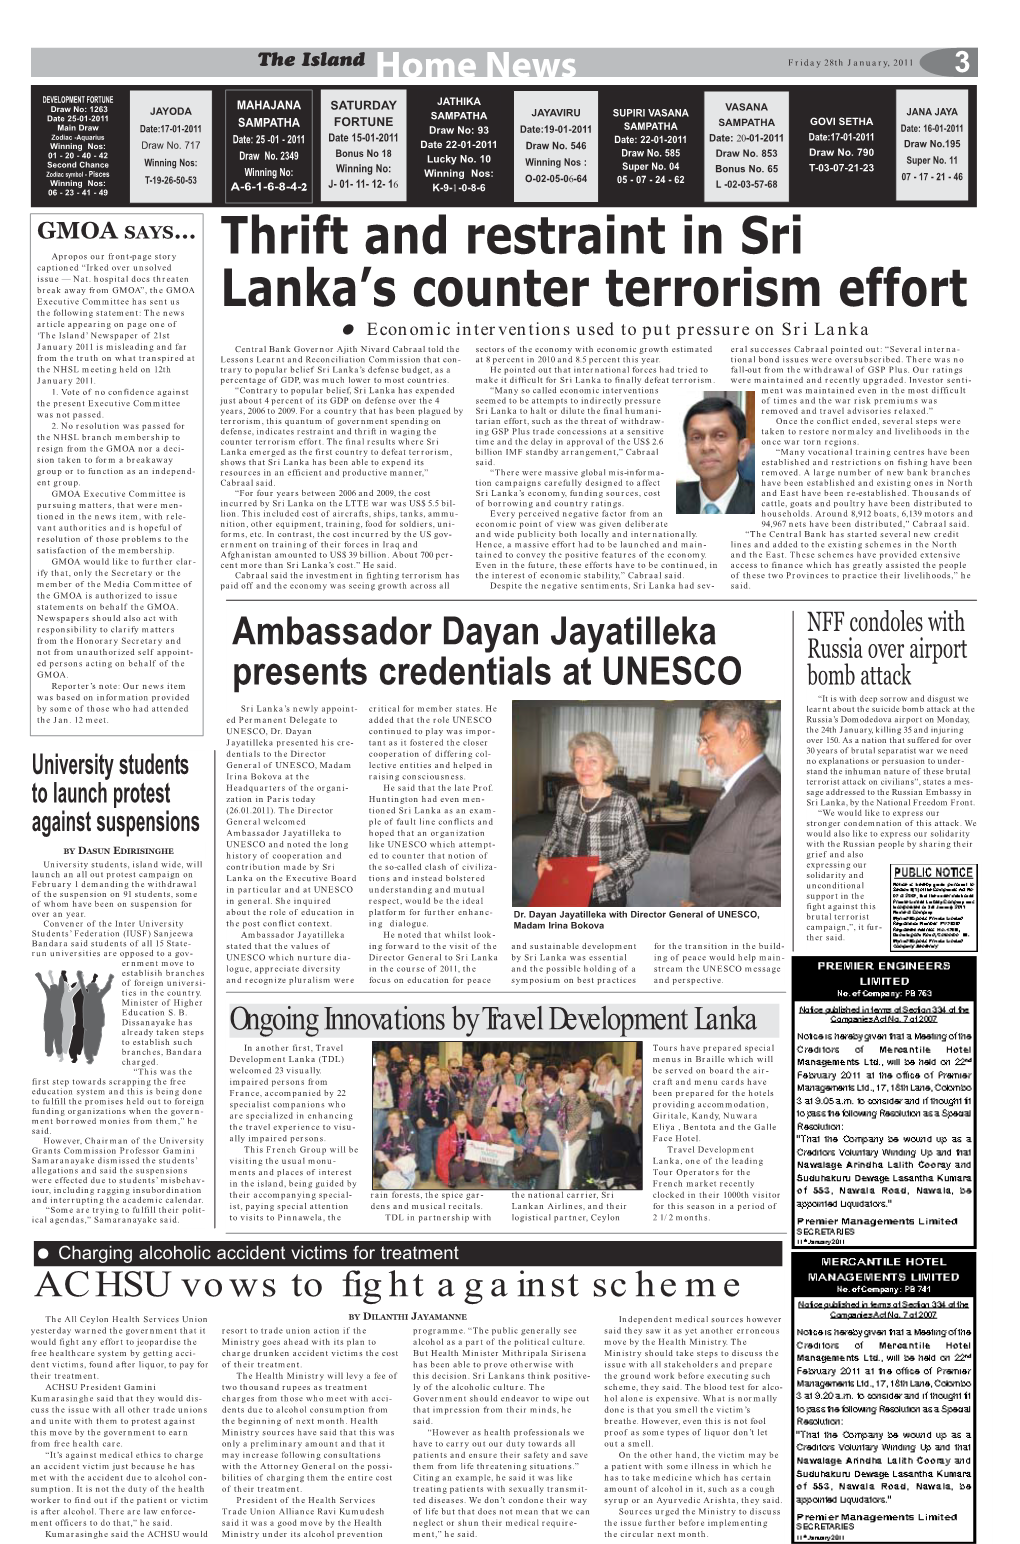 Thrift and Restraint in Sri Lanka's Counter Terrorism Effort